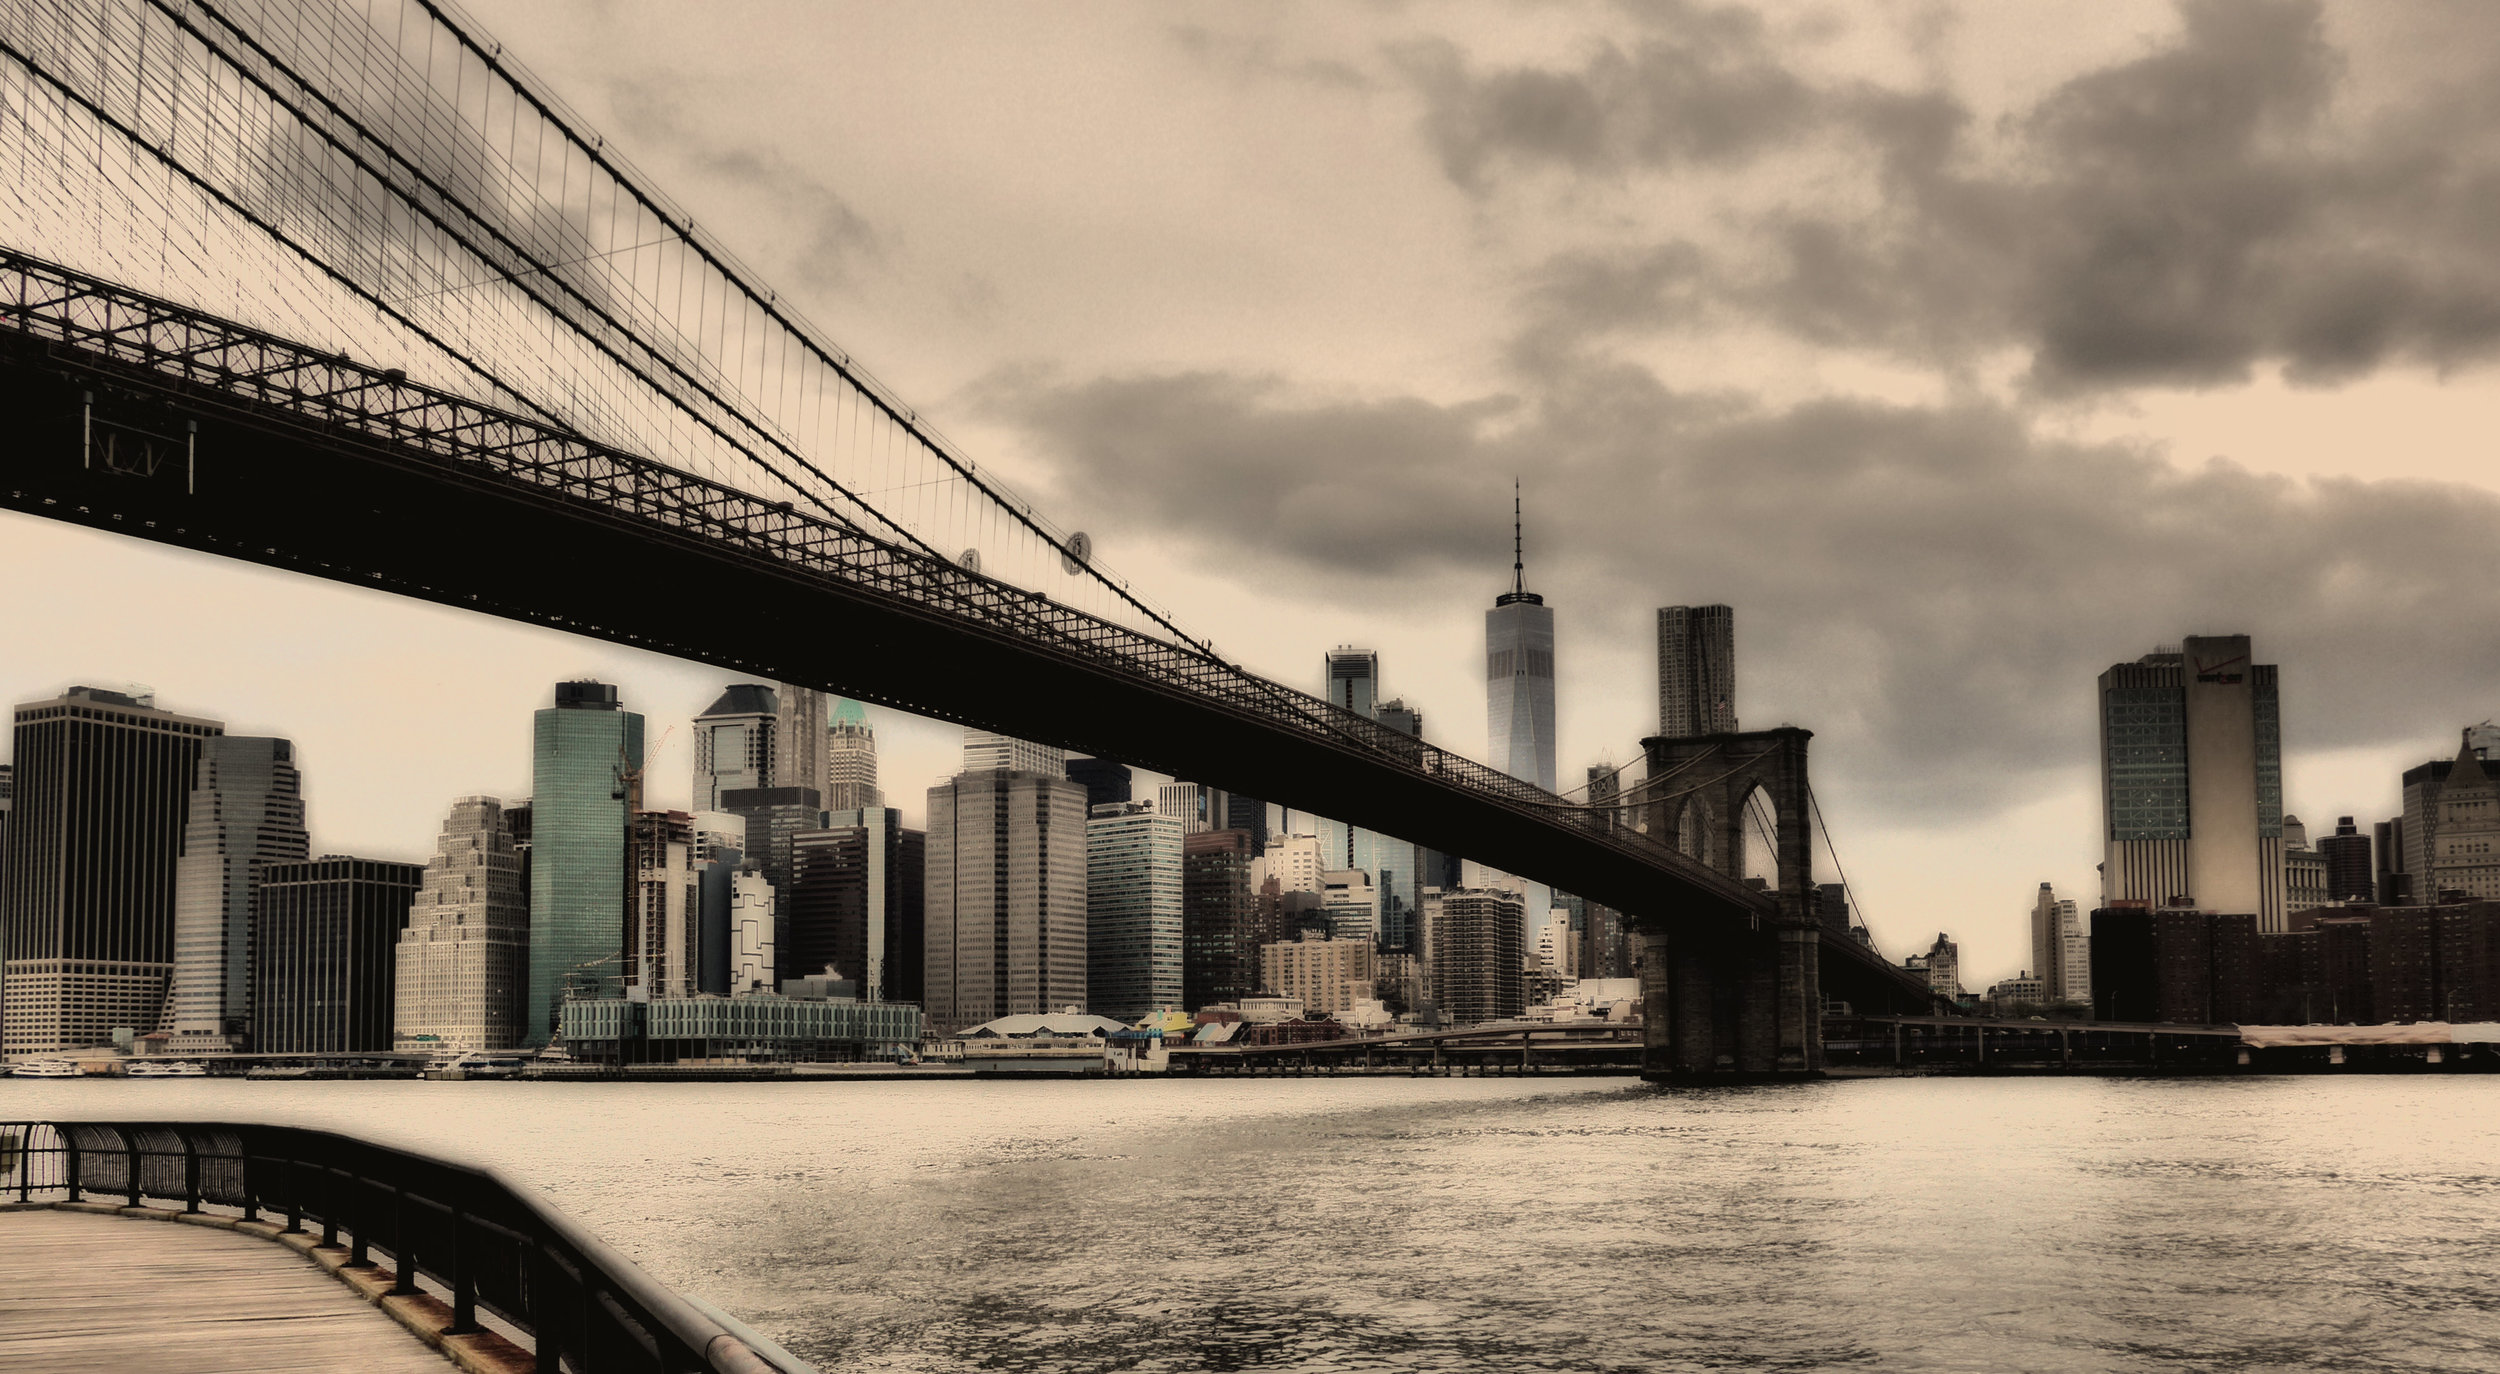  Dumbo - Brooklyn Bridge 